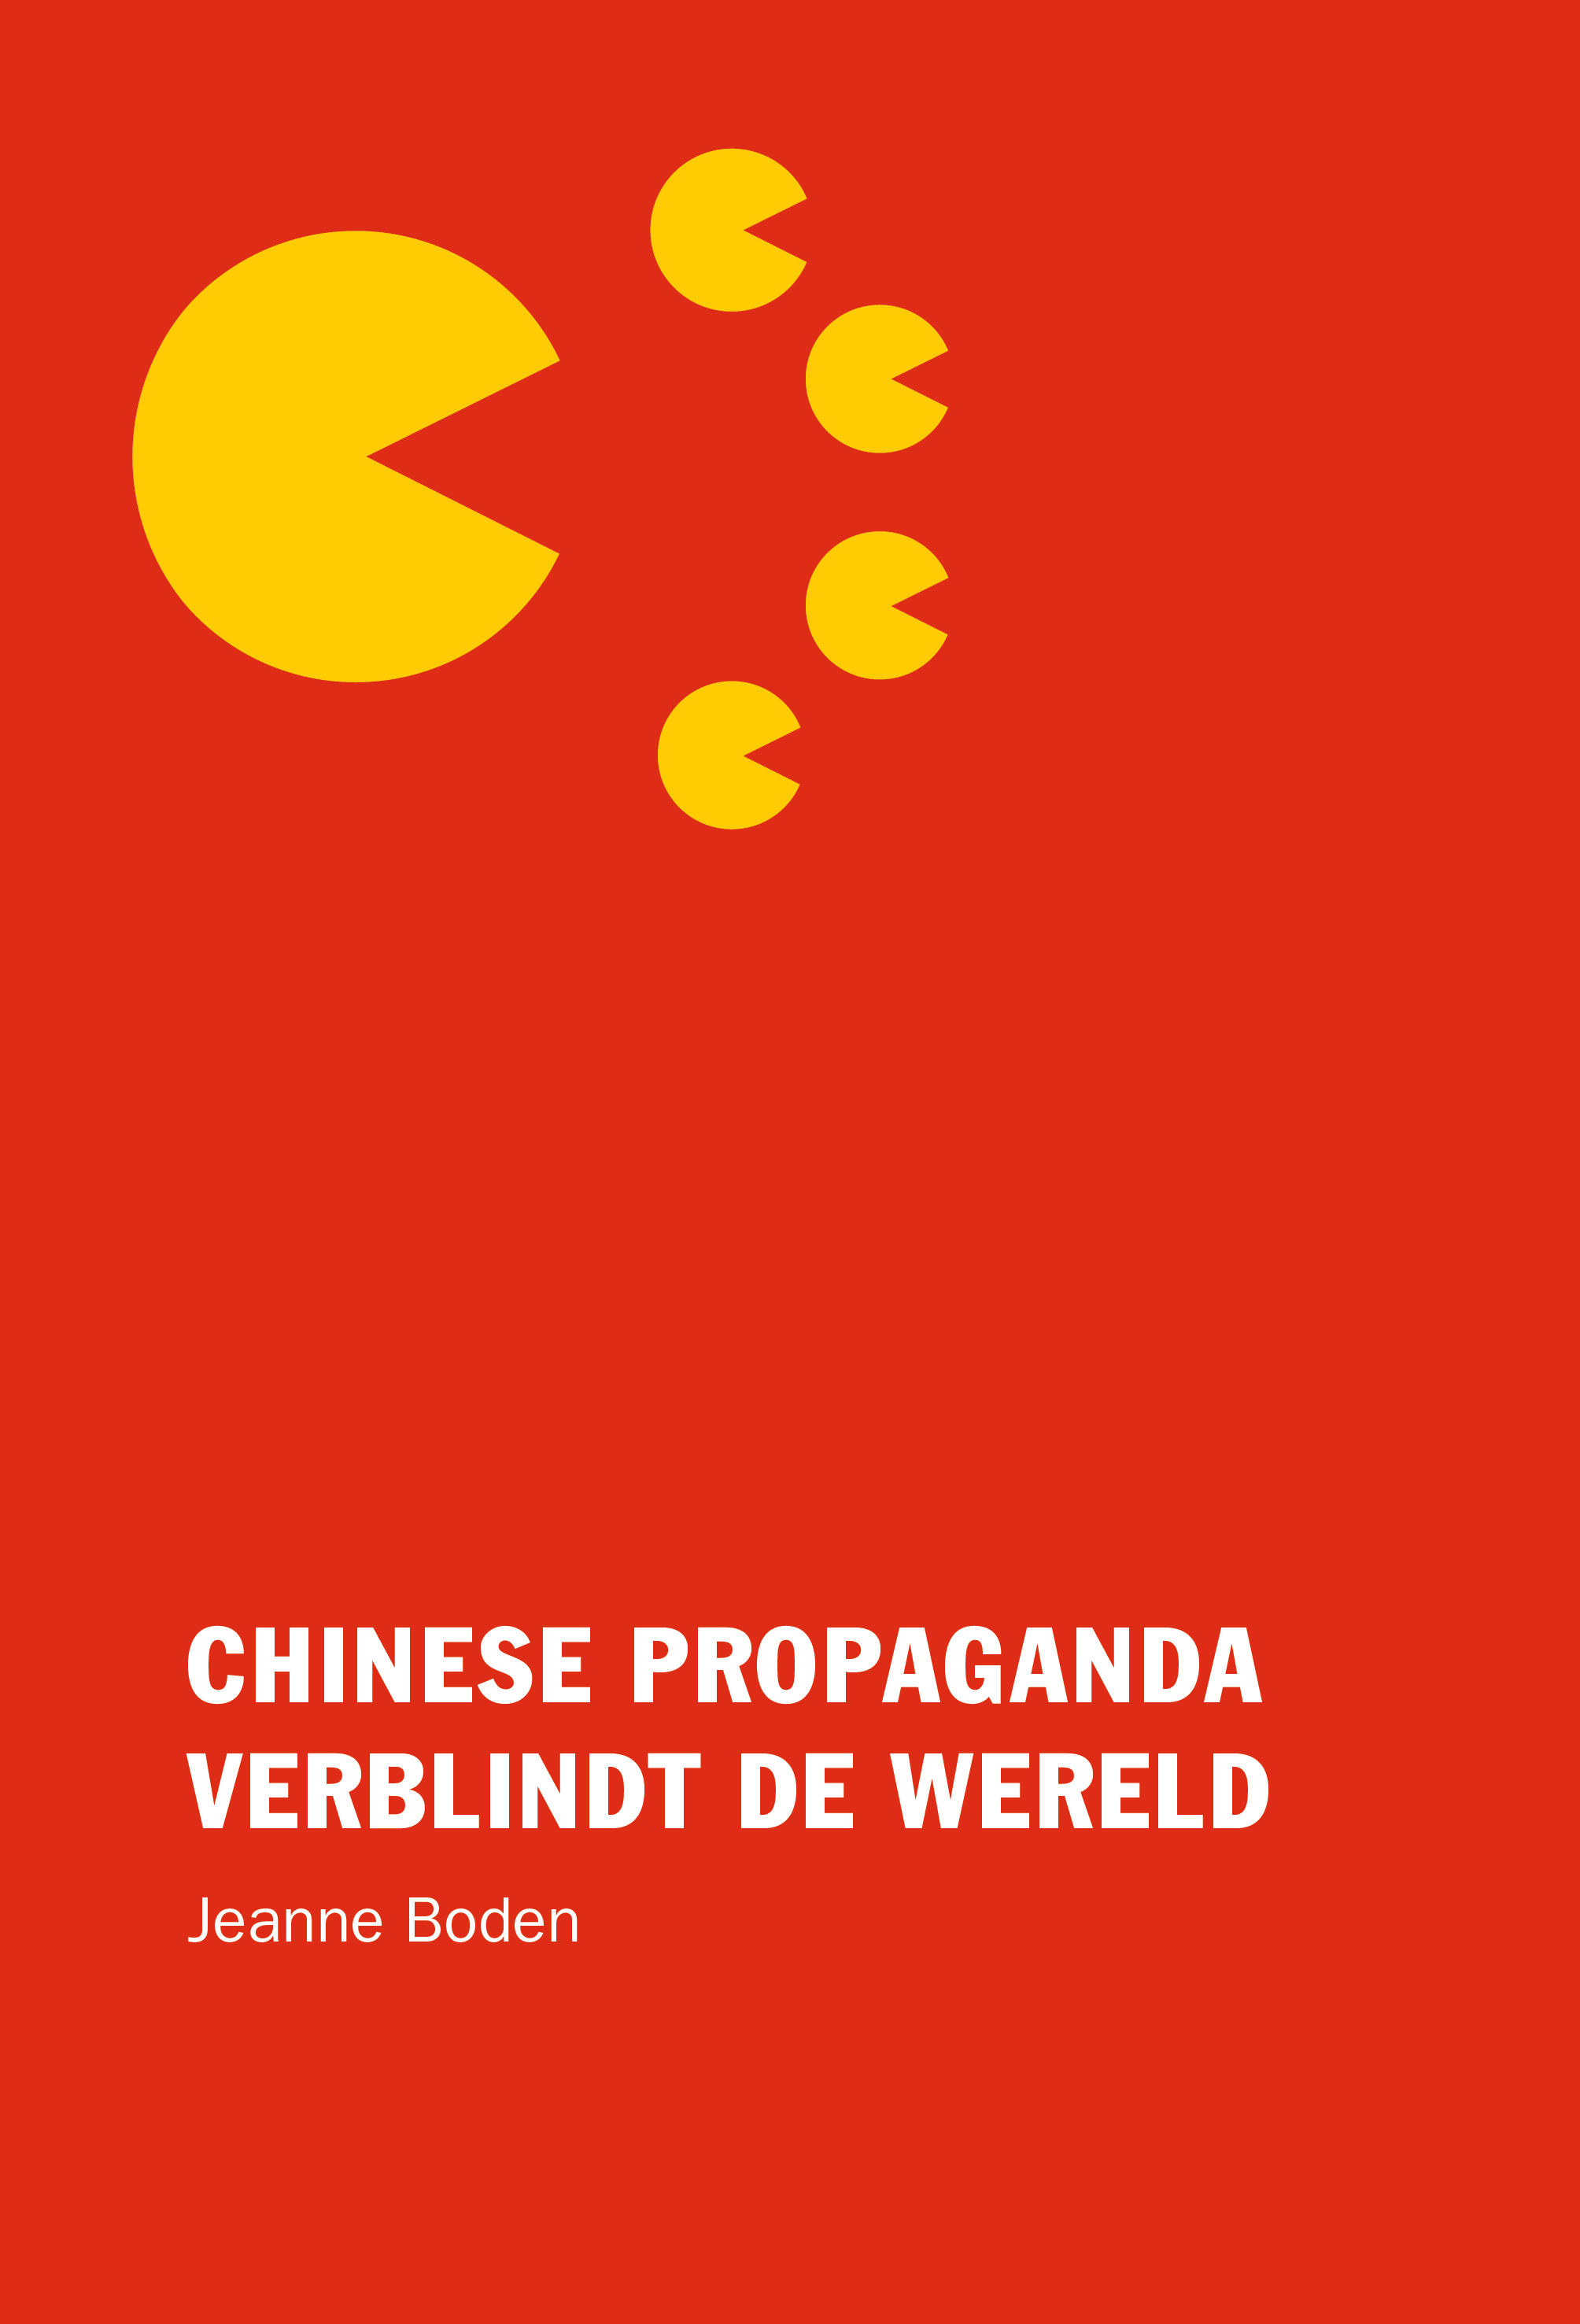 Chinese propaganda verblindt de wereld